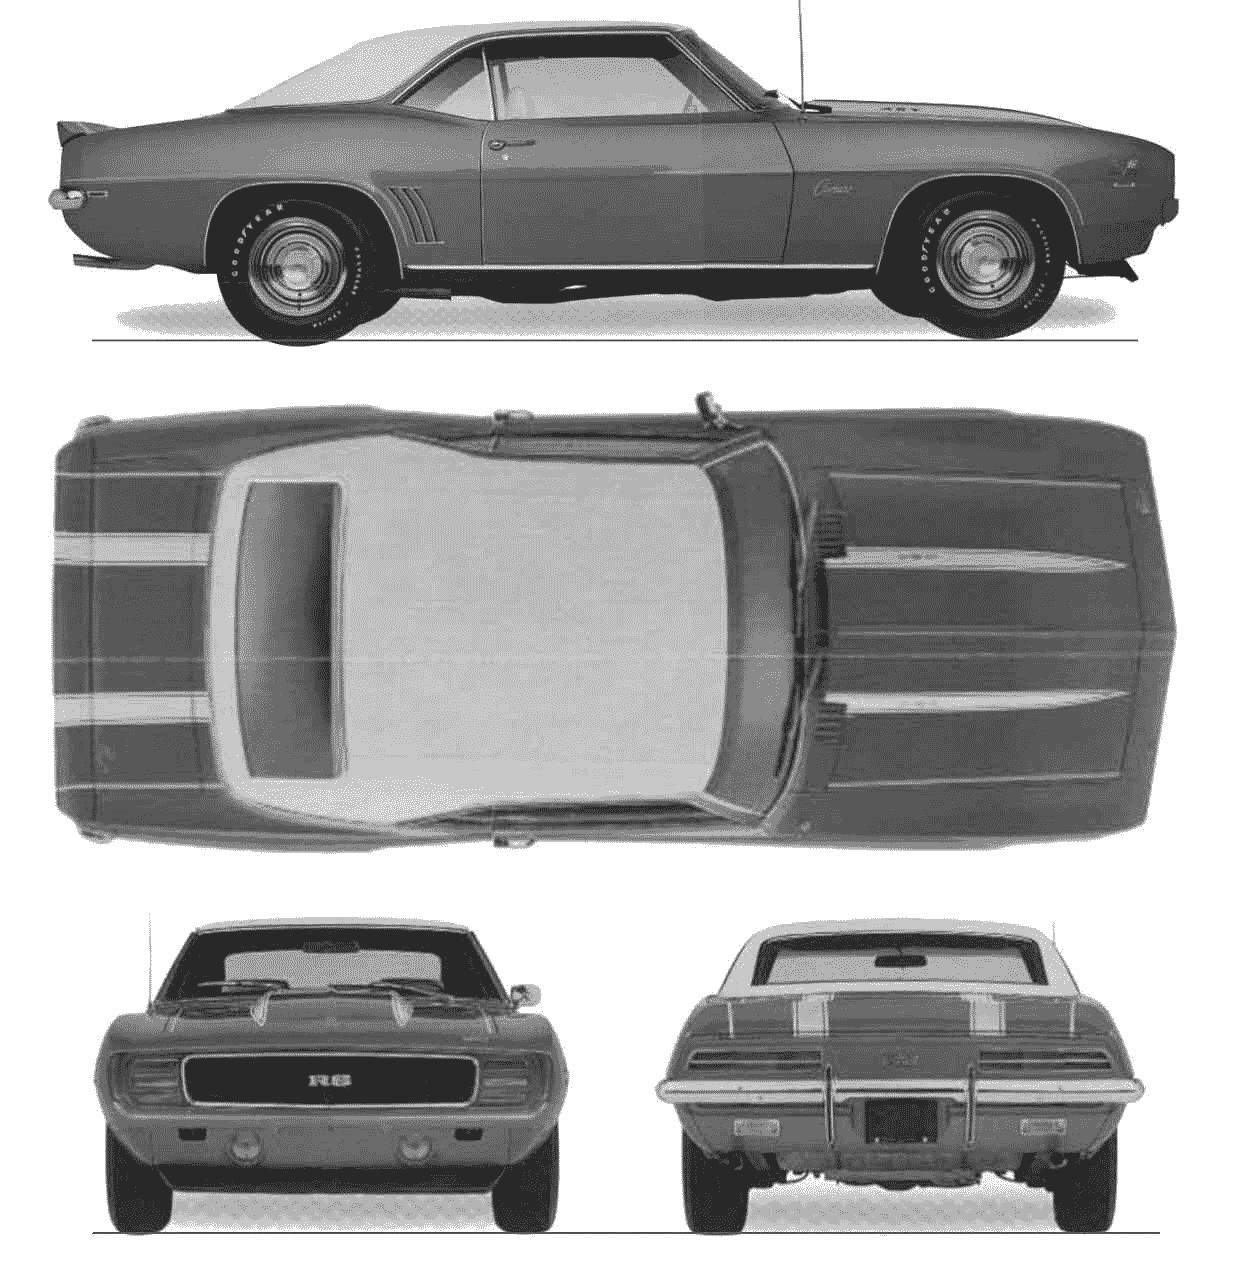 Chevrolet Camaro ZL1 blueprint